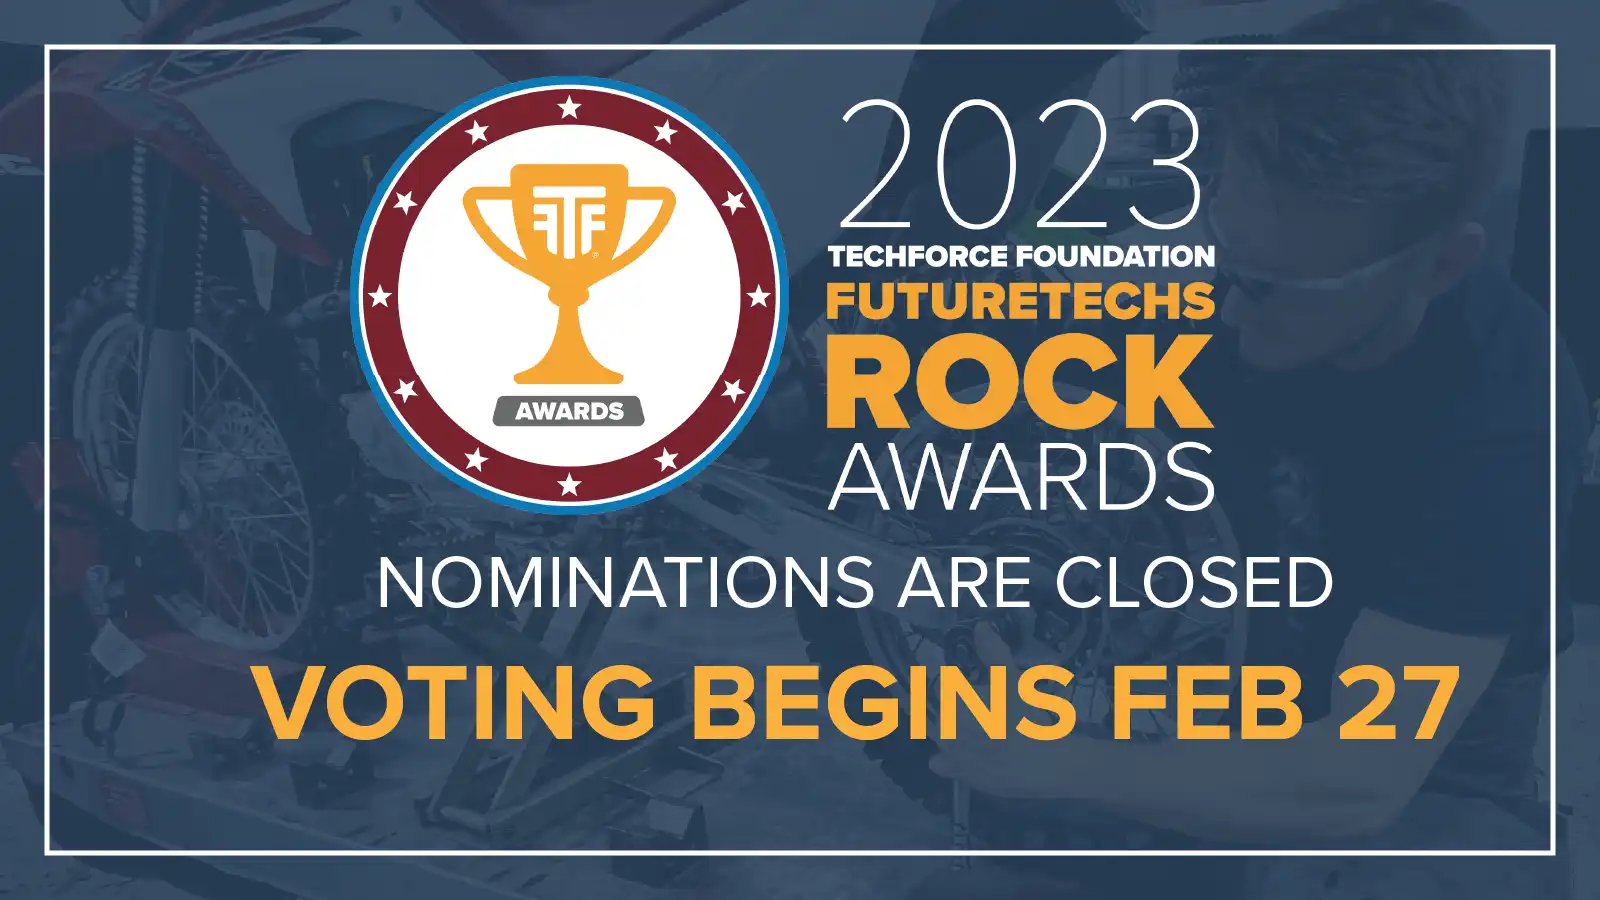 FutureTechs Rock Awards | Workforce Development | TechForce